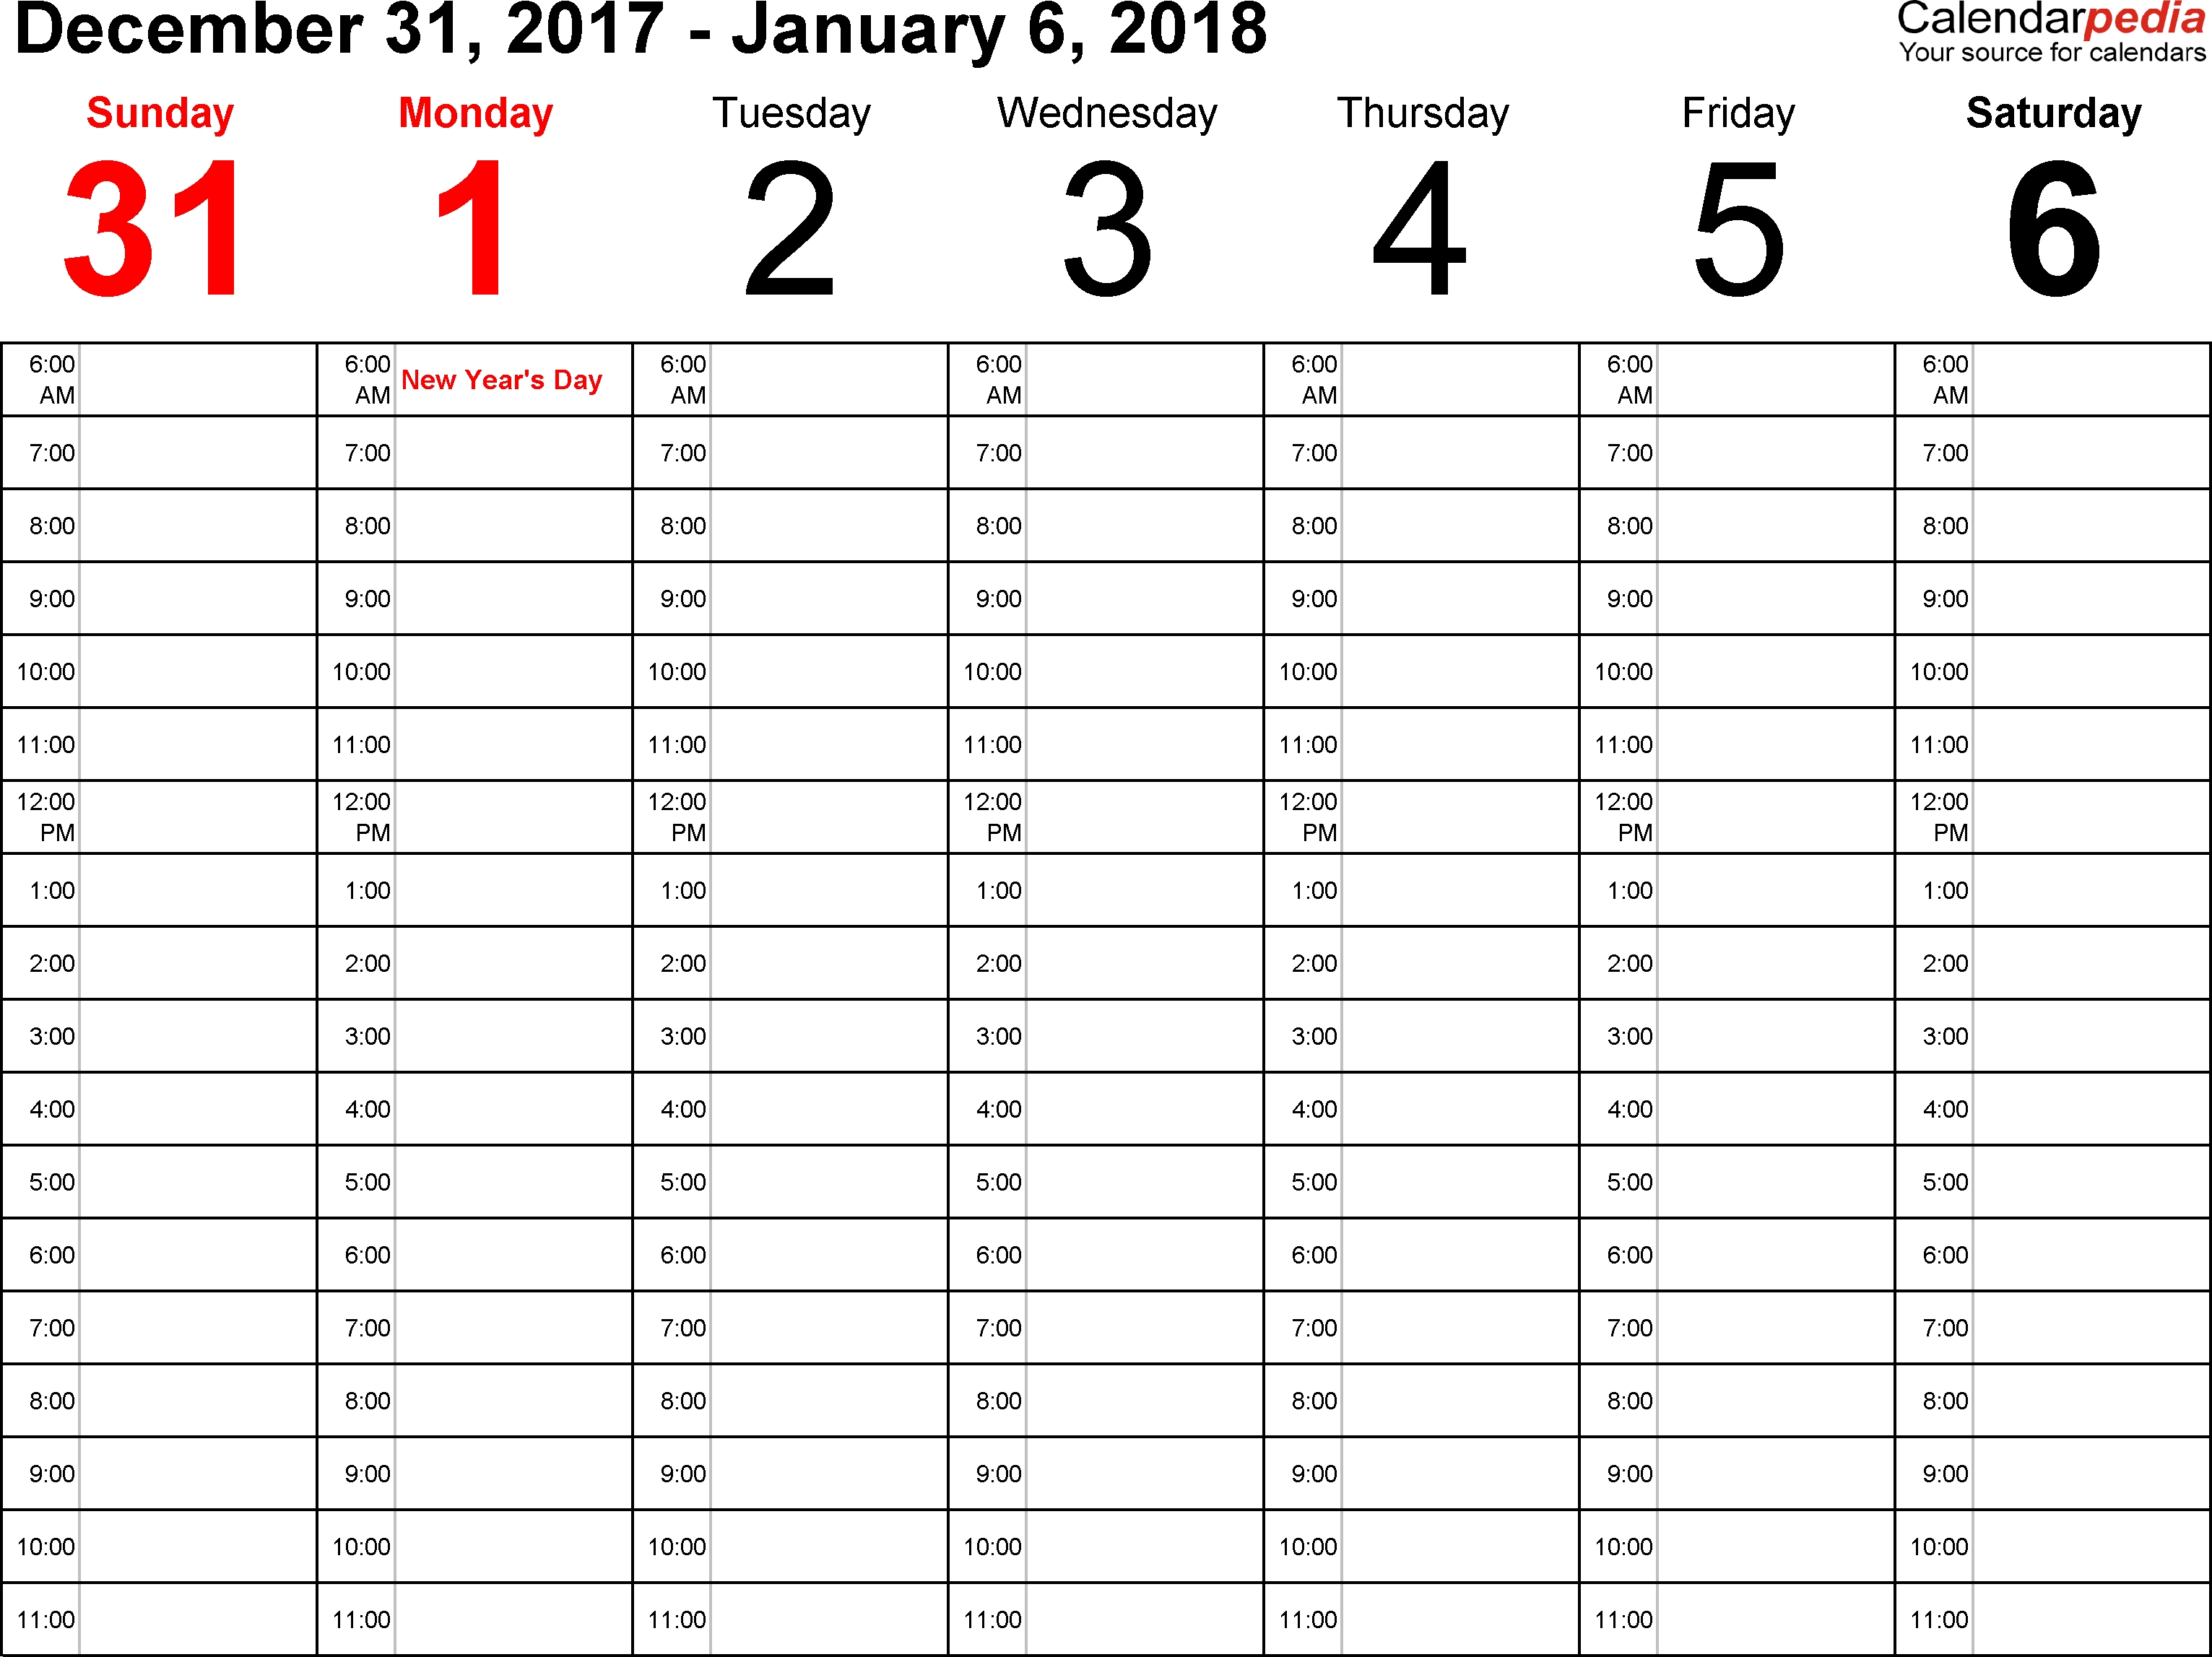 Weekly Calendar 2018 For Word - 12 Free Printable Templates for Week Printable Calendar With Lines